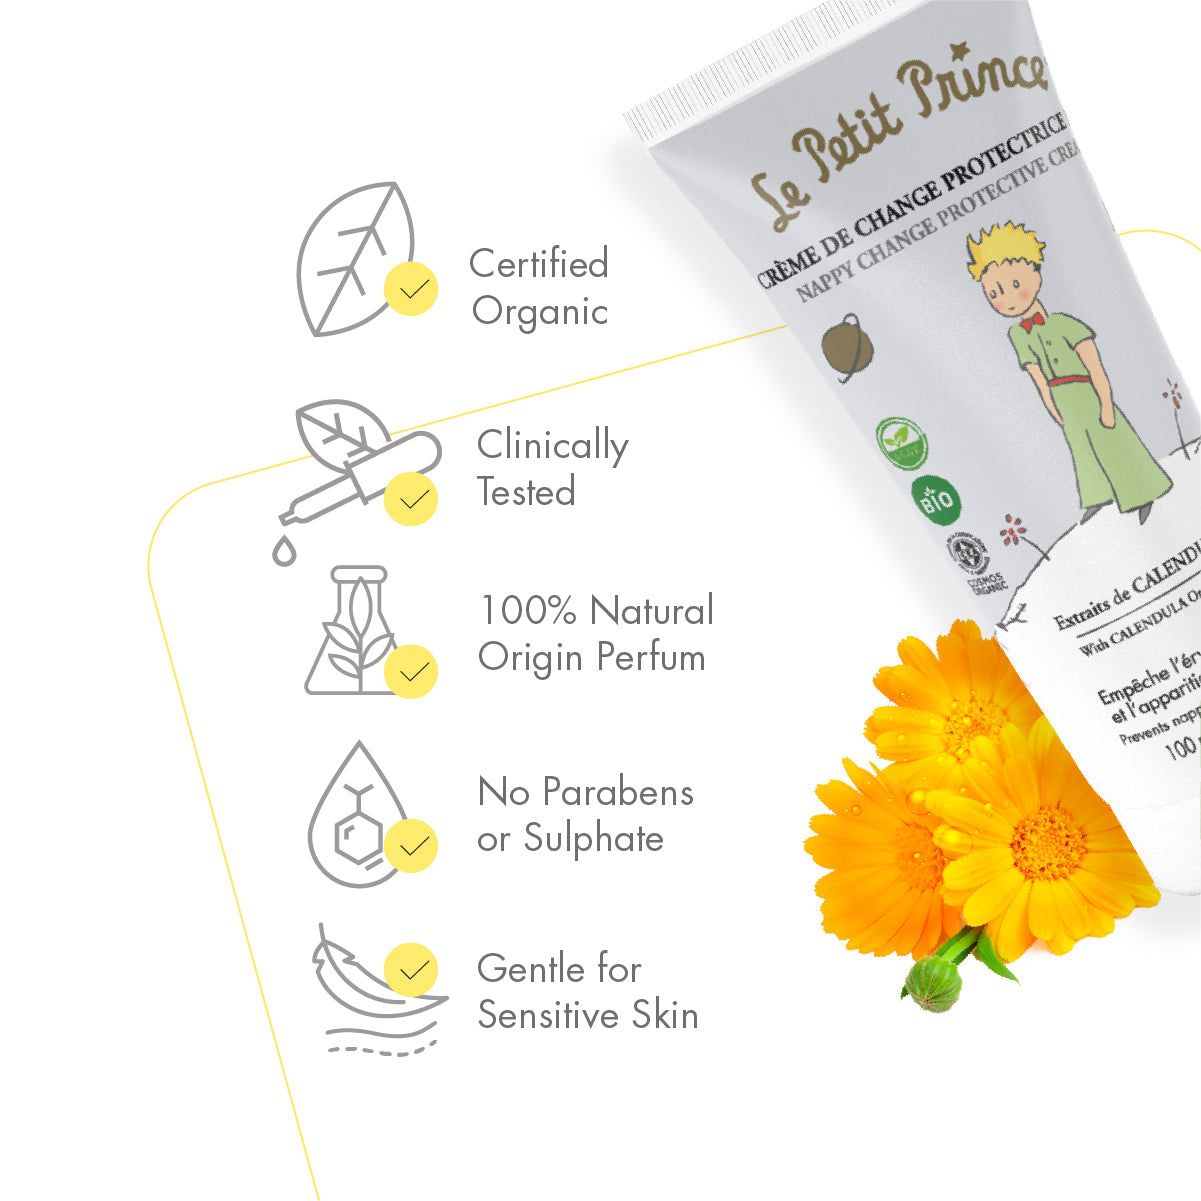 Le Petit Prince Nappy Change Protective Cream - 100 ml